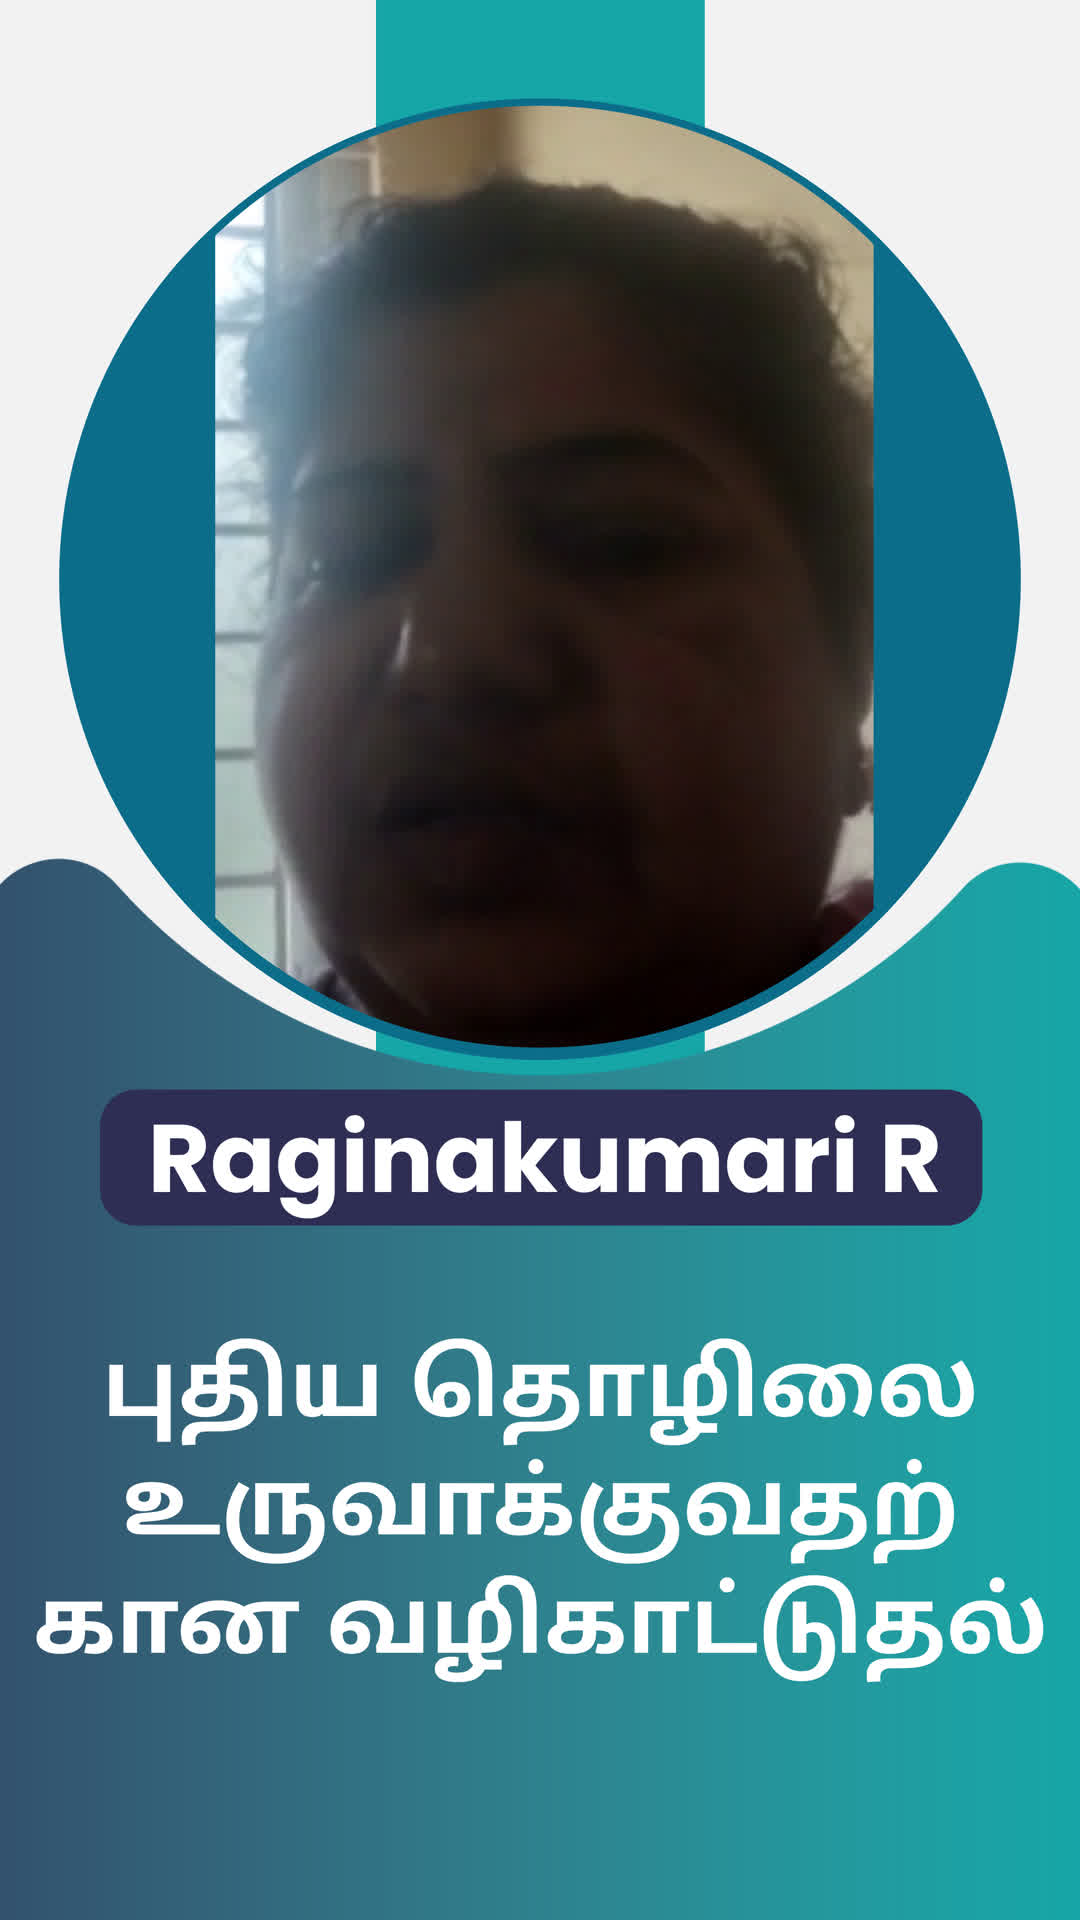 Raginakumari R's Honest Review of ffreedom app - Coimbatore ,Tamil Nadu